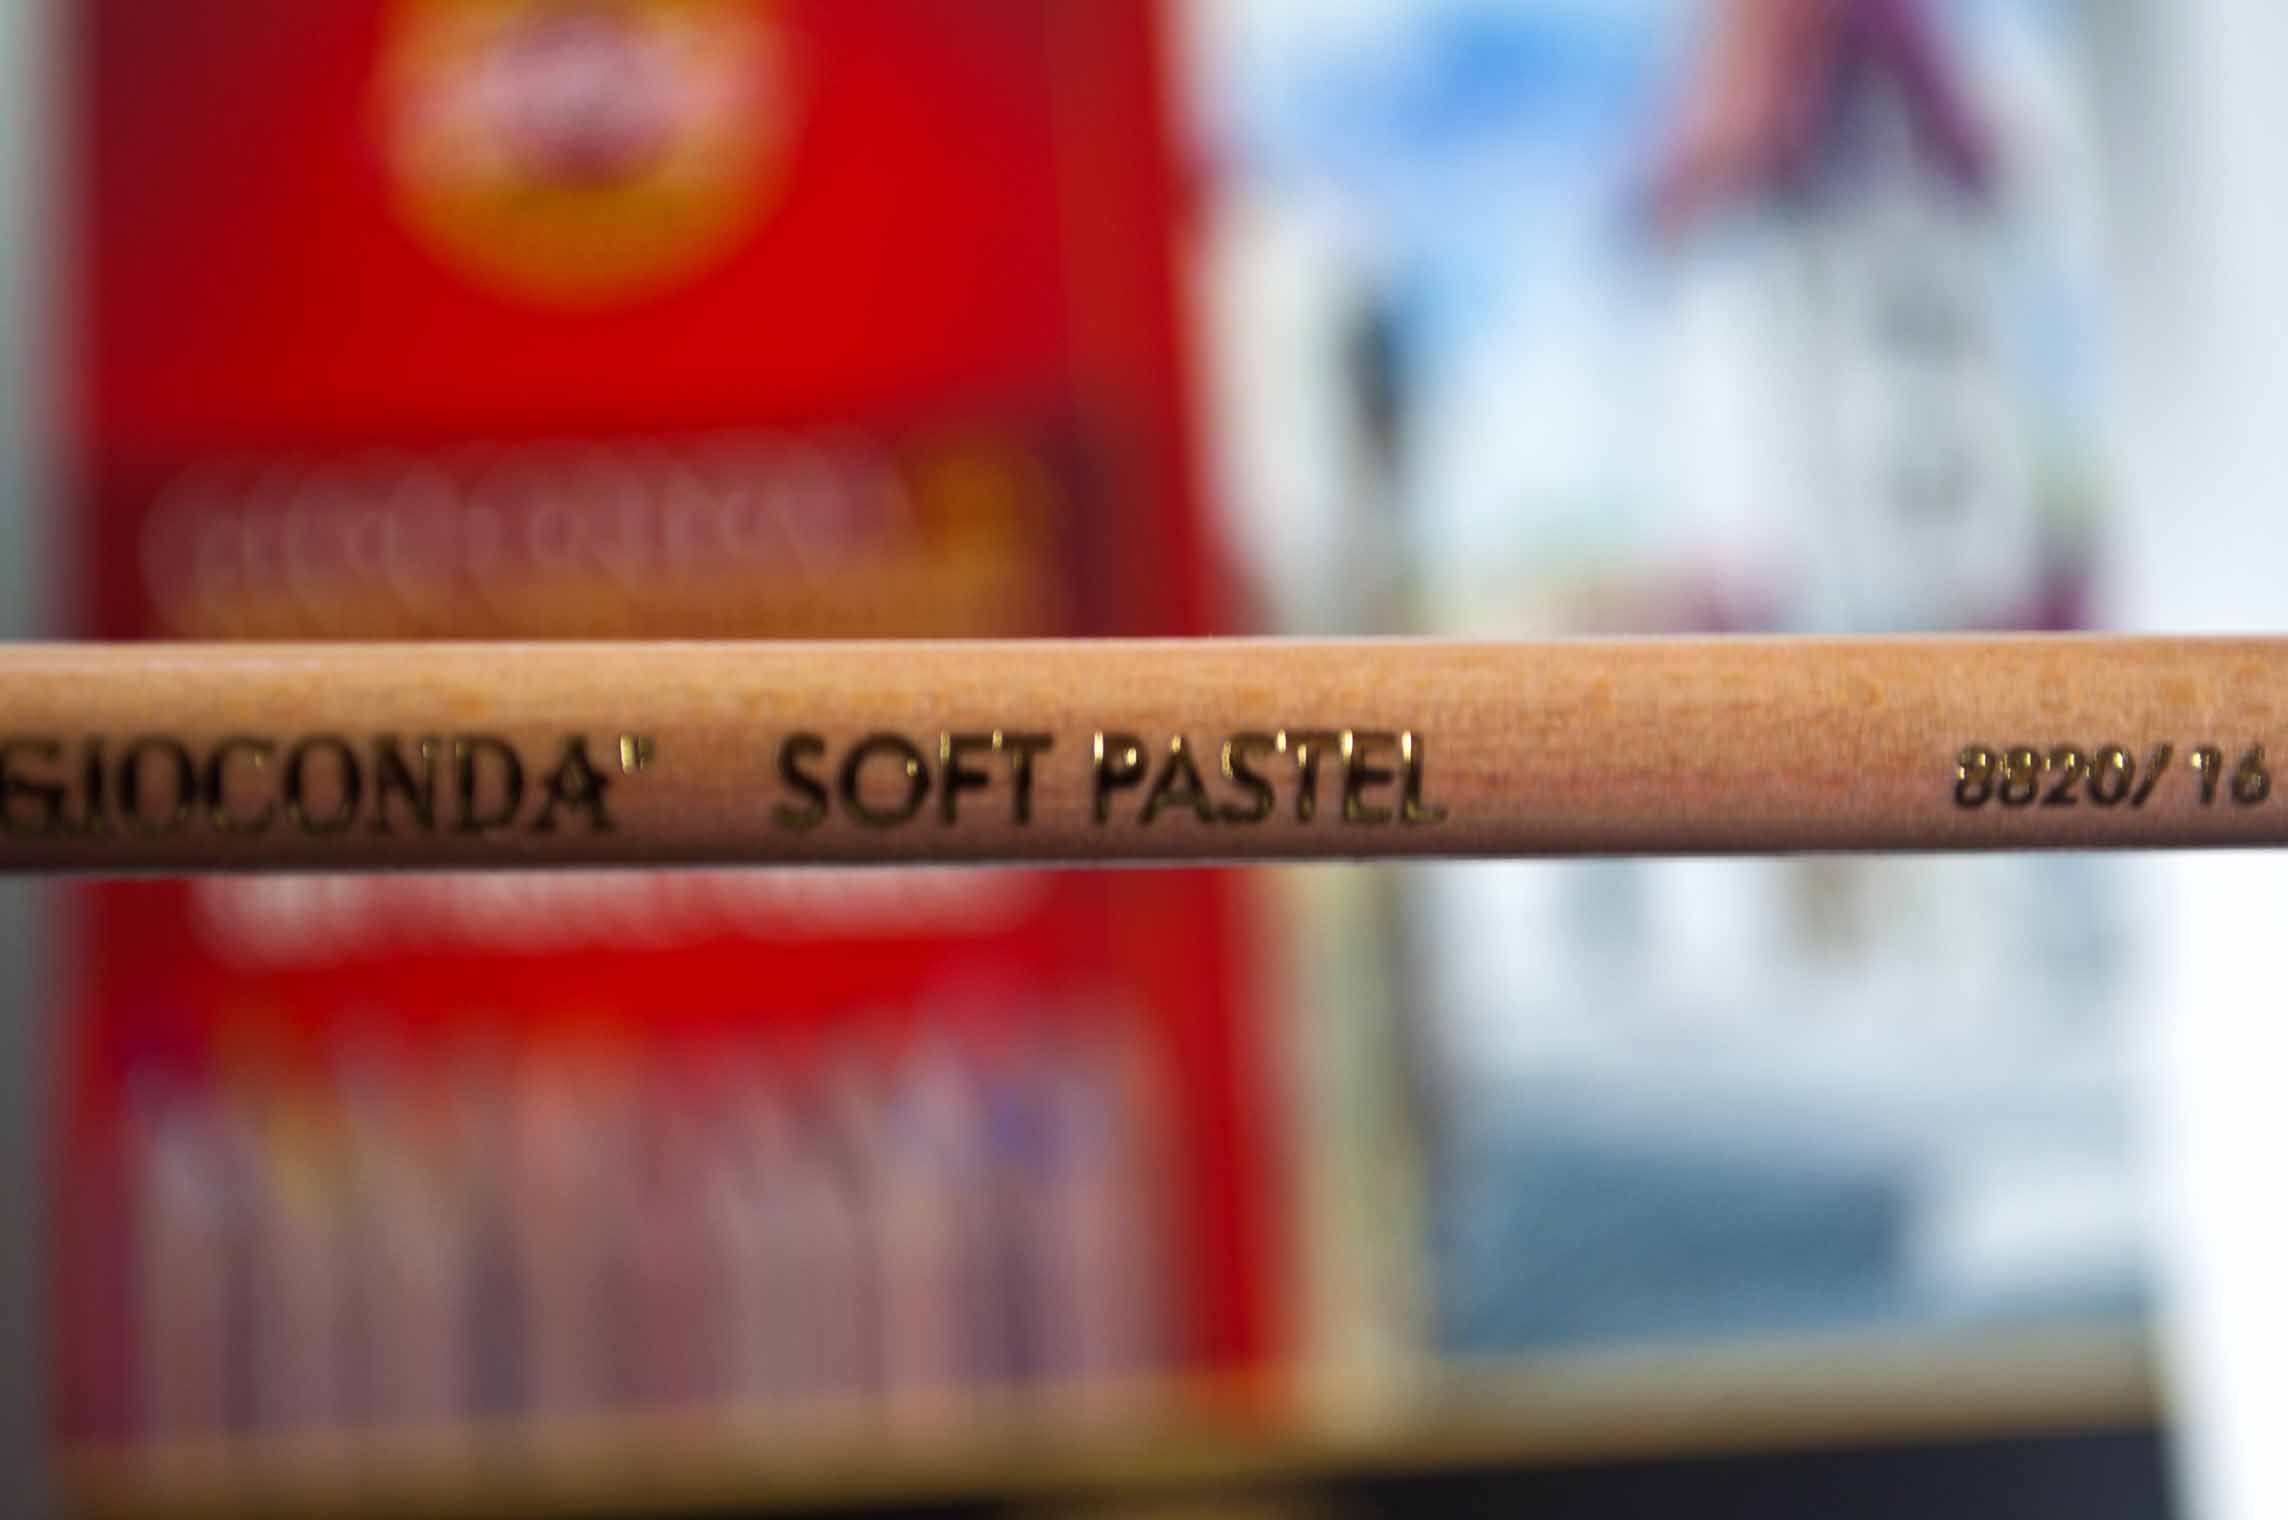 Koh-i-noor Gioconda Soft Pastel Pencils Review